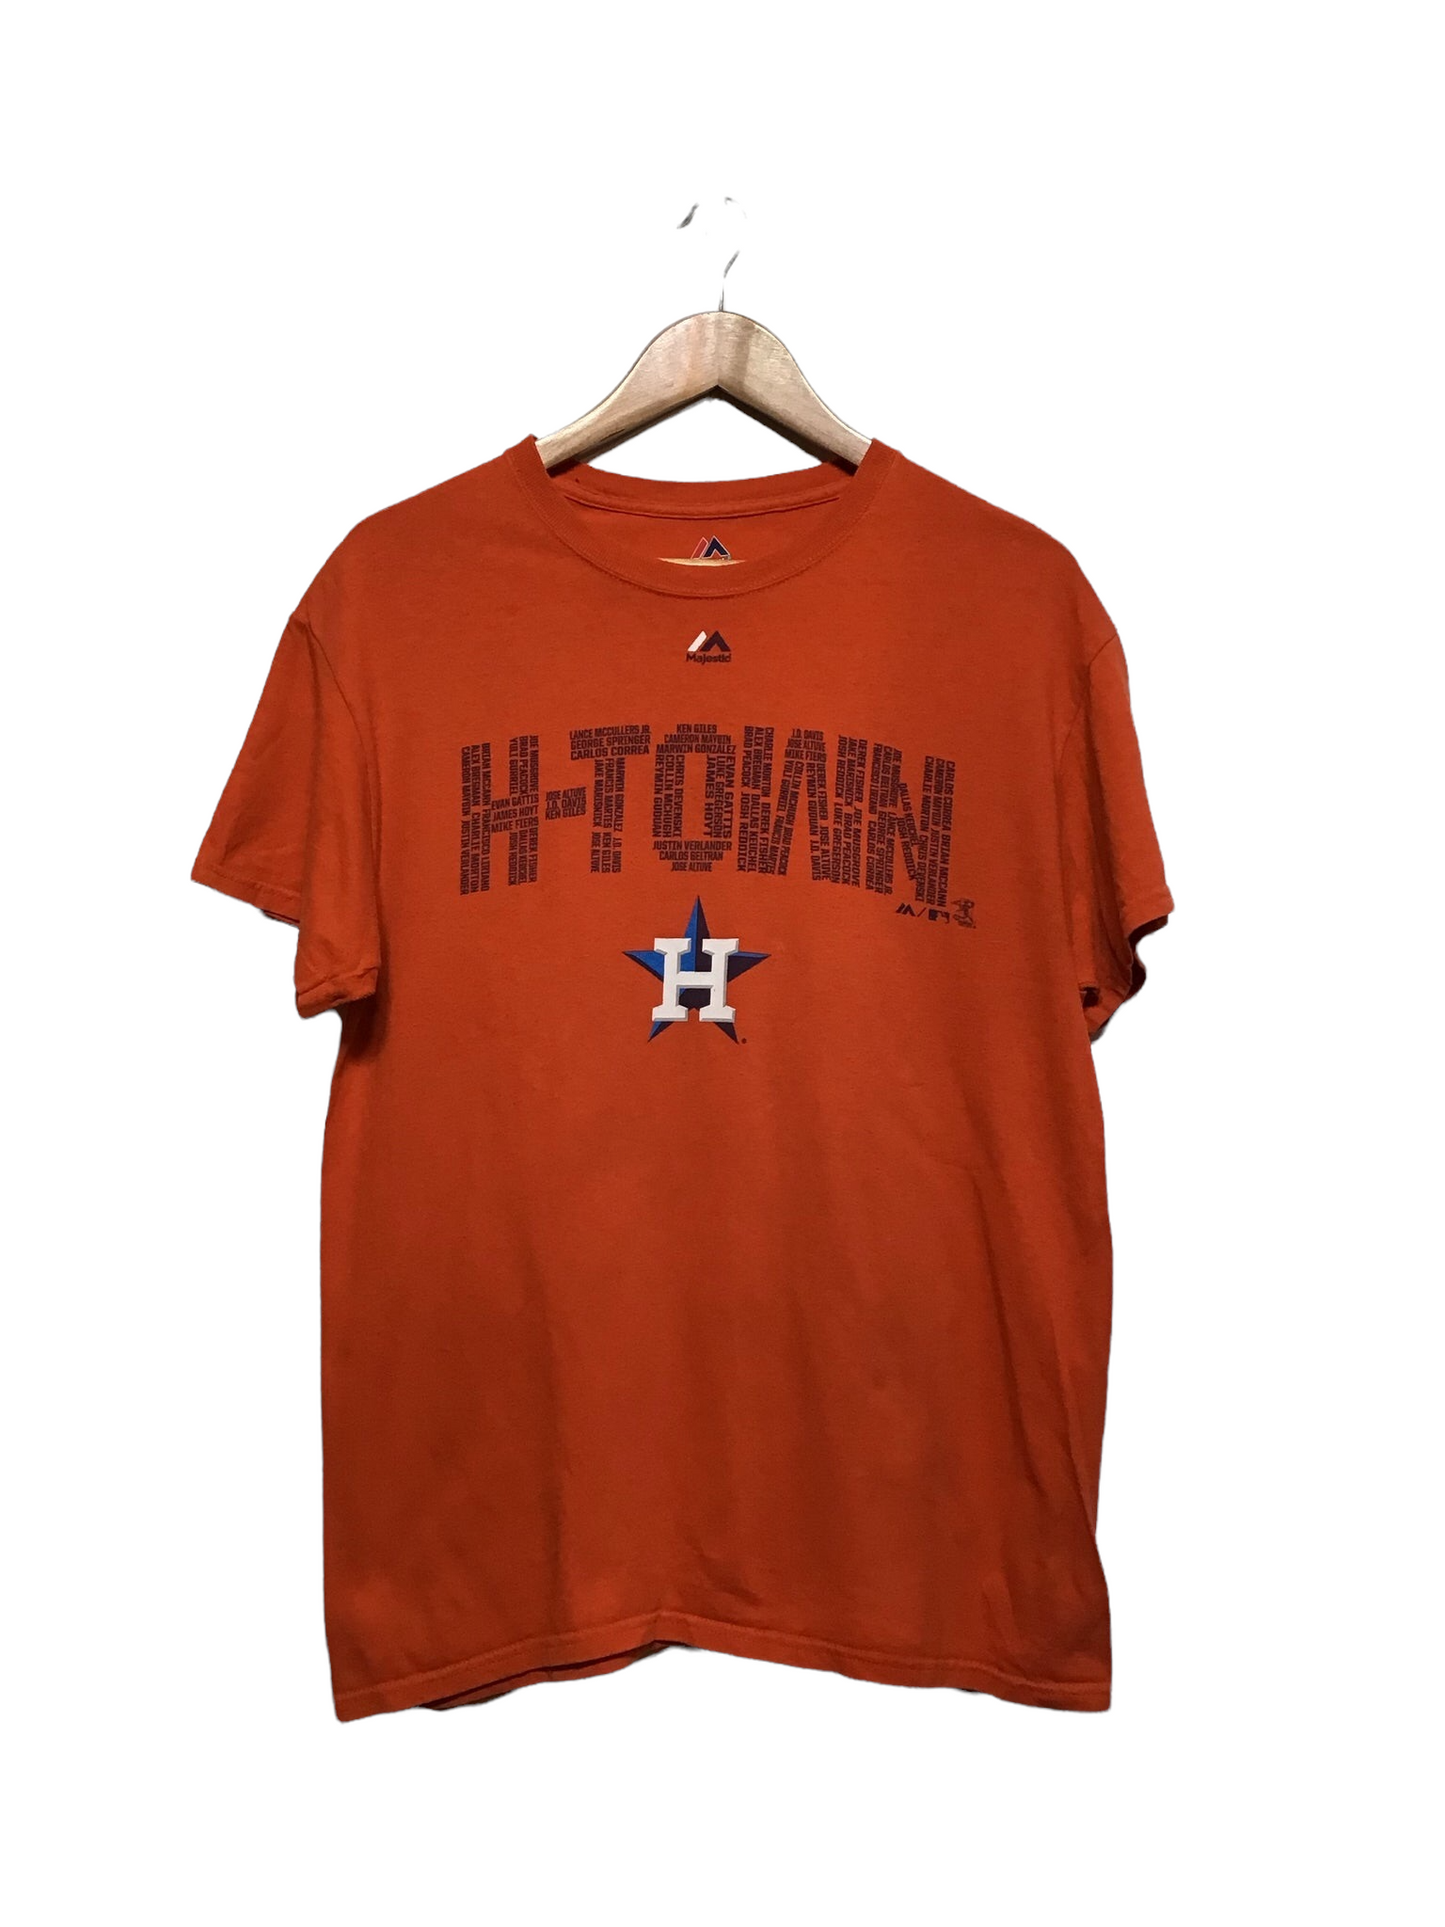 Majestic Houston Astros H-Town Tee (Size S)